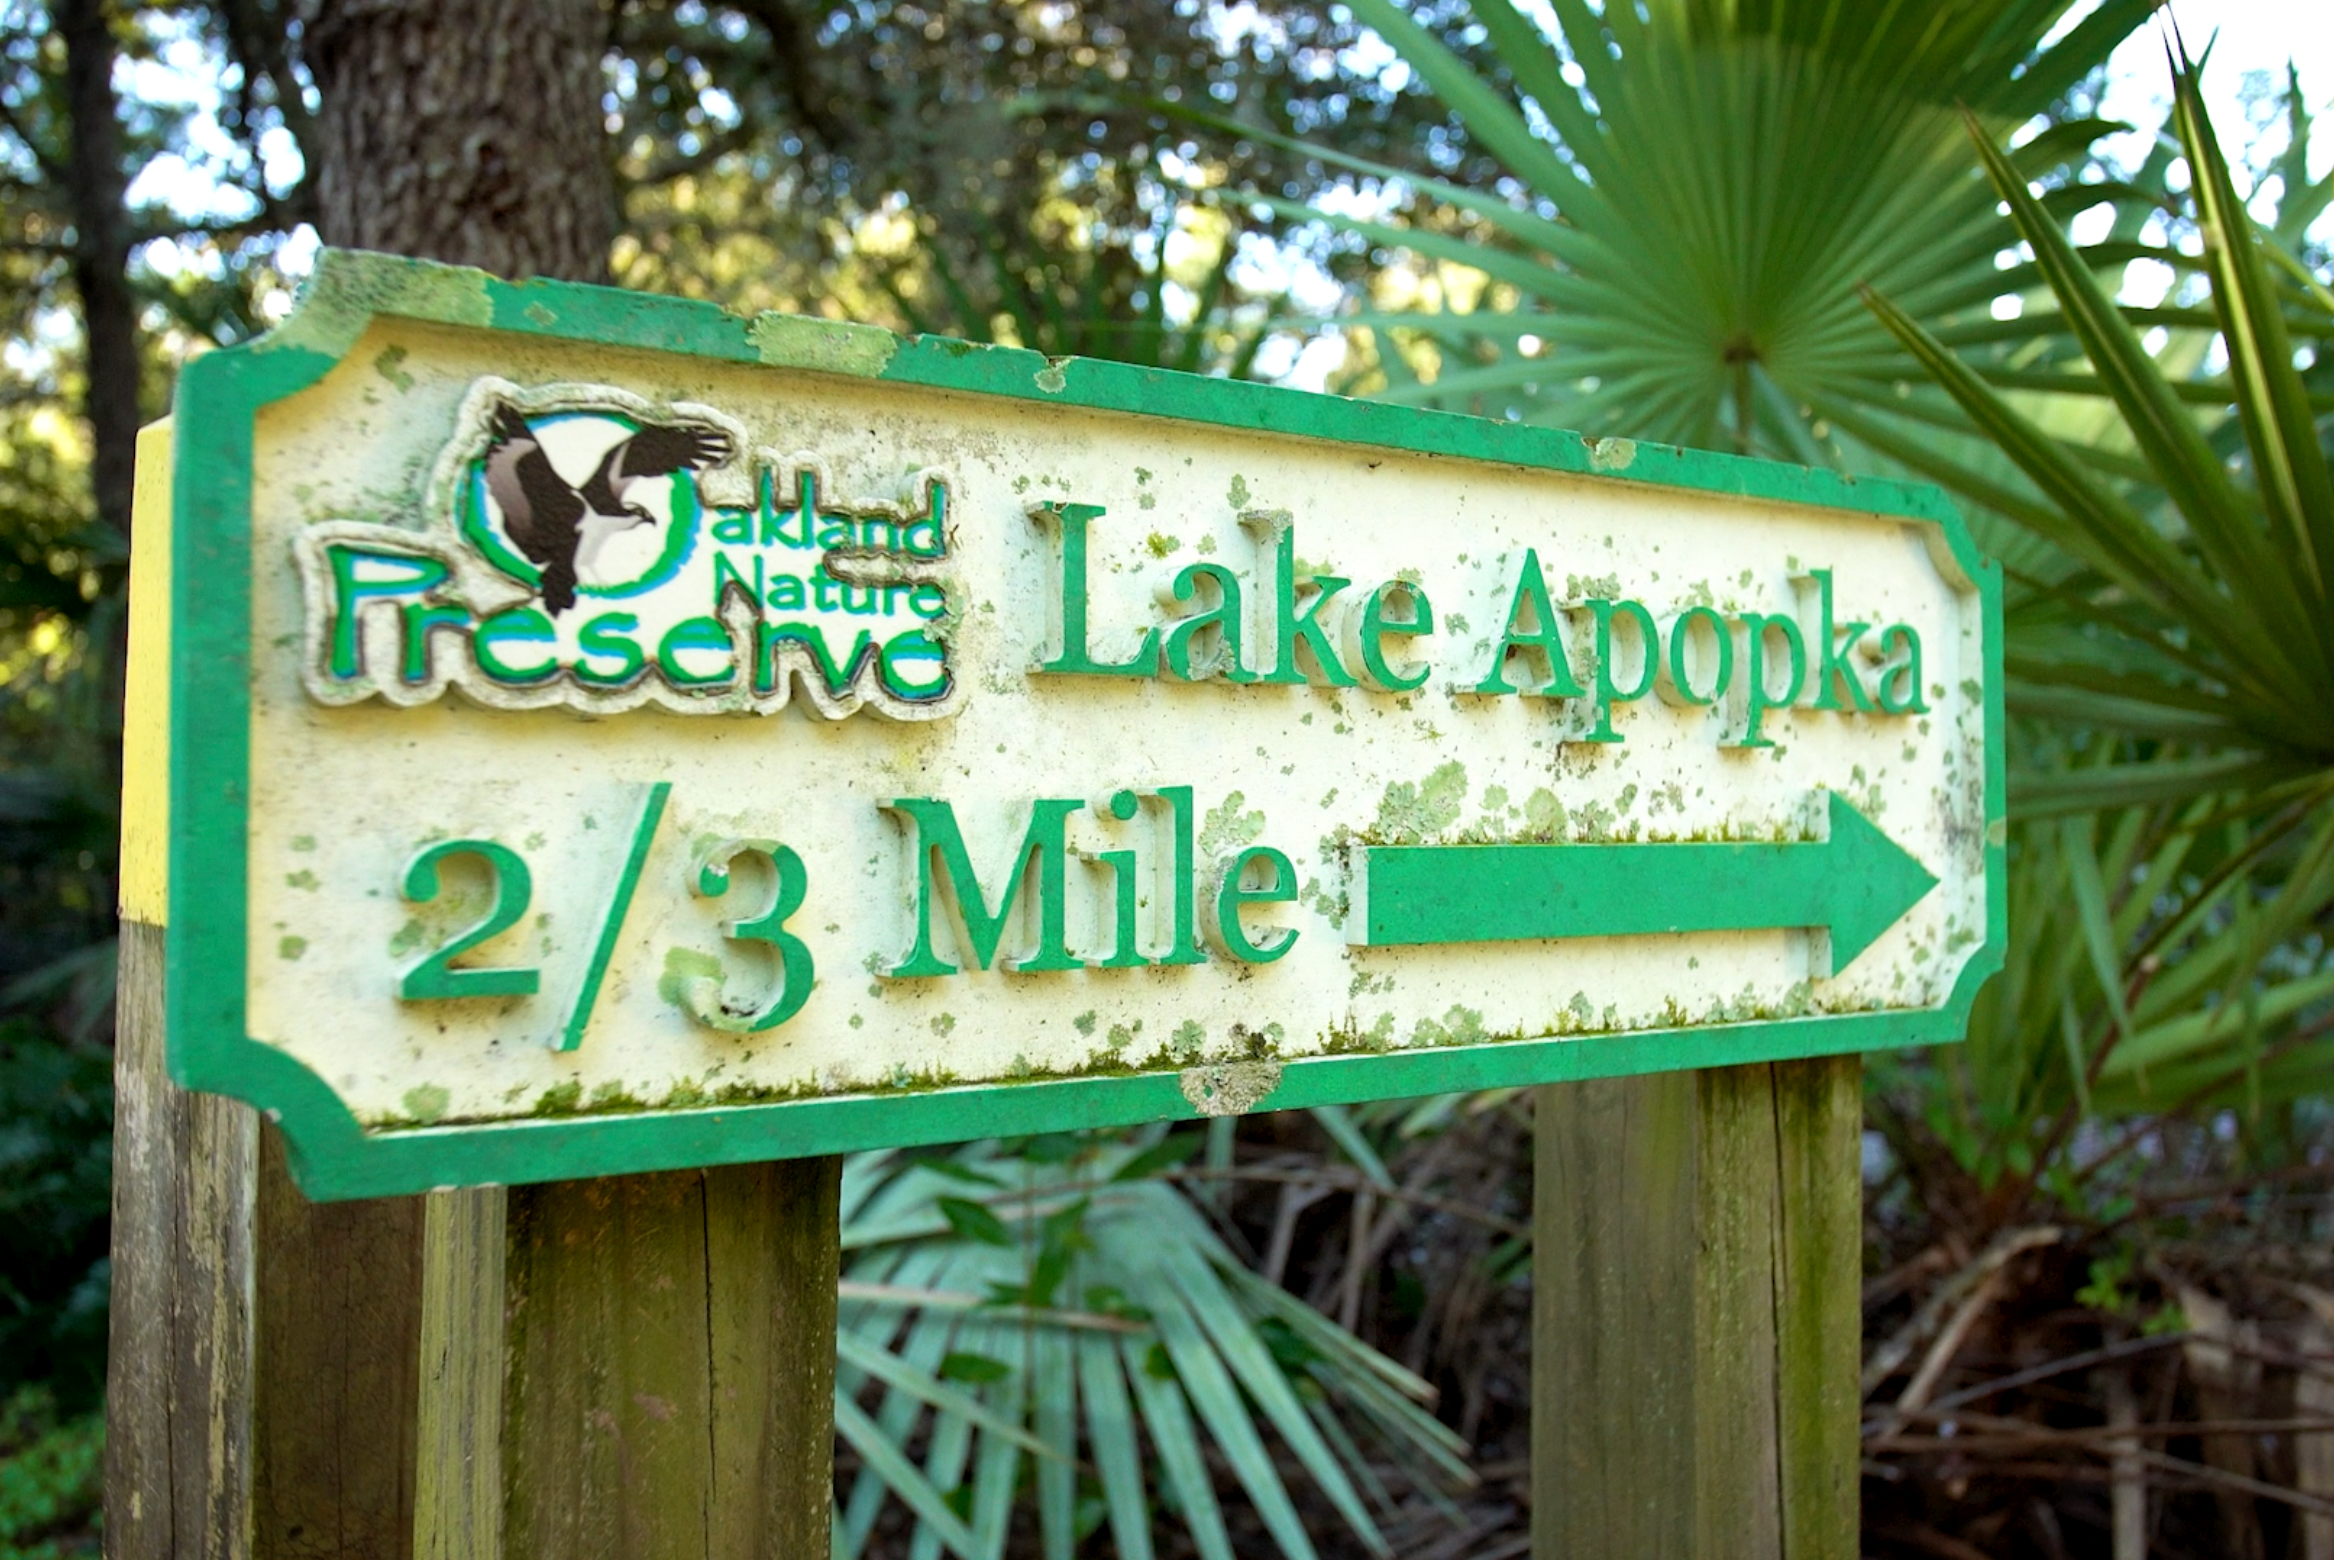 Wild walking: sign pointing the way to the waterside of Lake Apopka